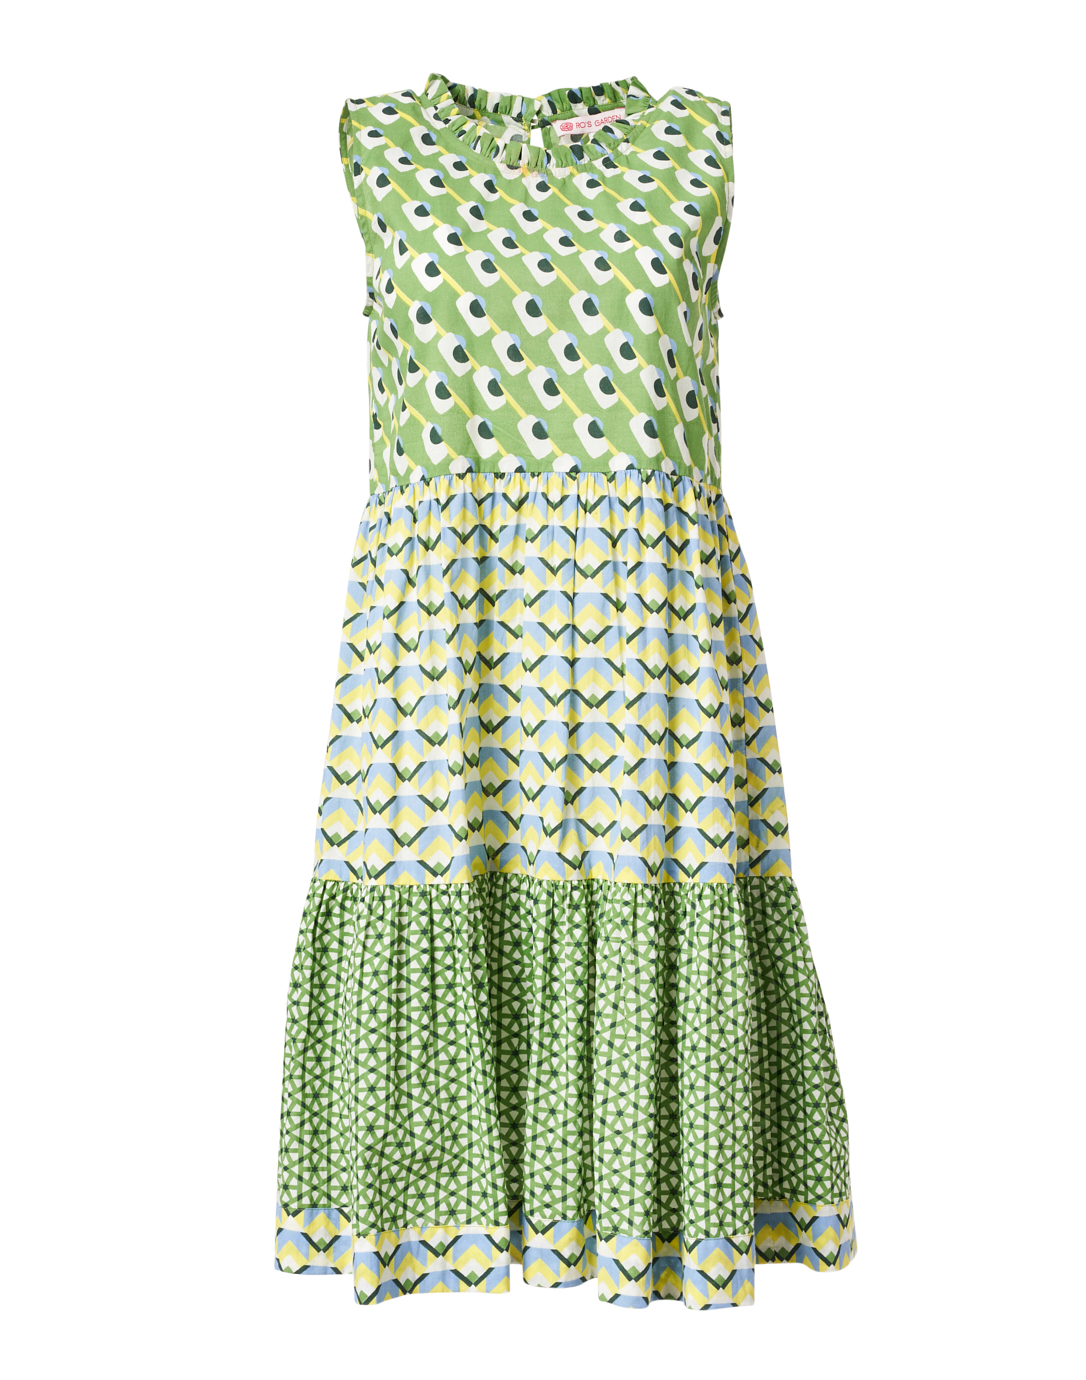 Mariel Green Geometric Printed Cotton Dress | Ro's Garden | Halsbrook